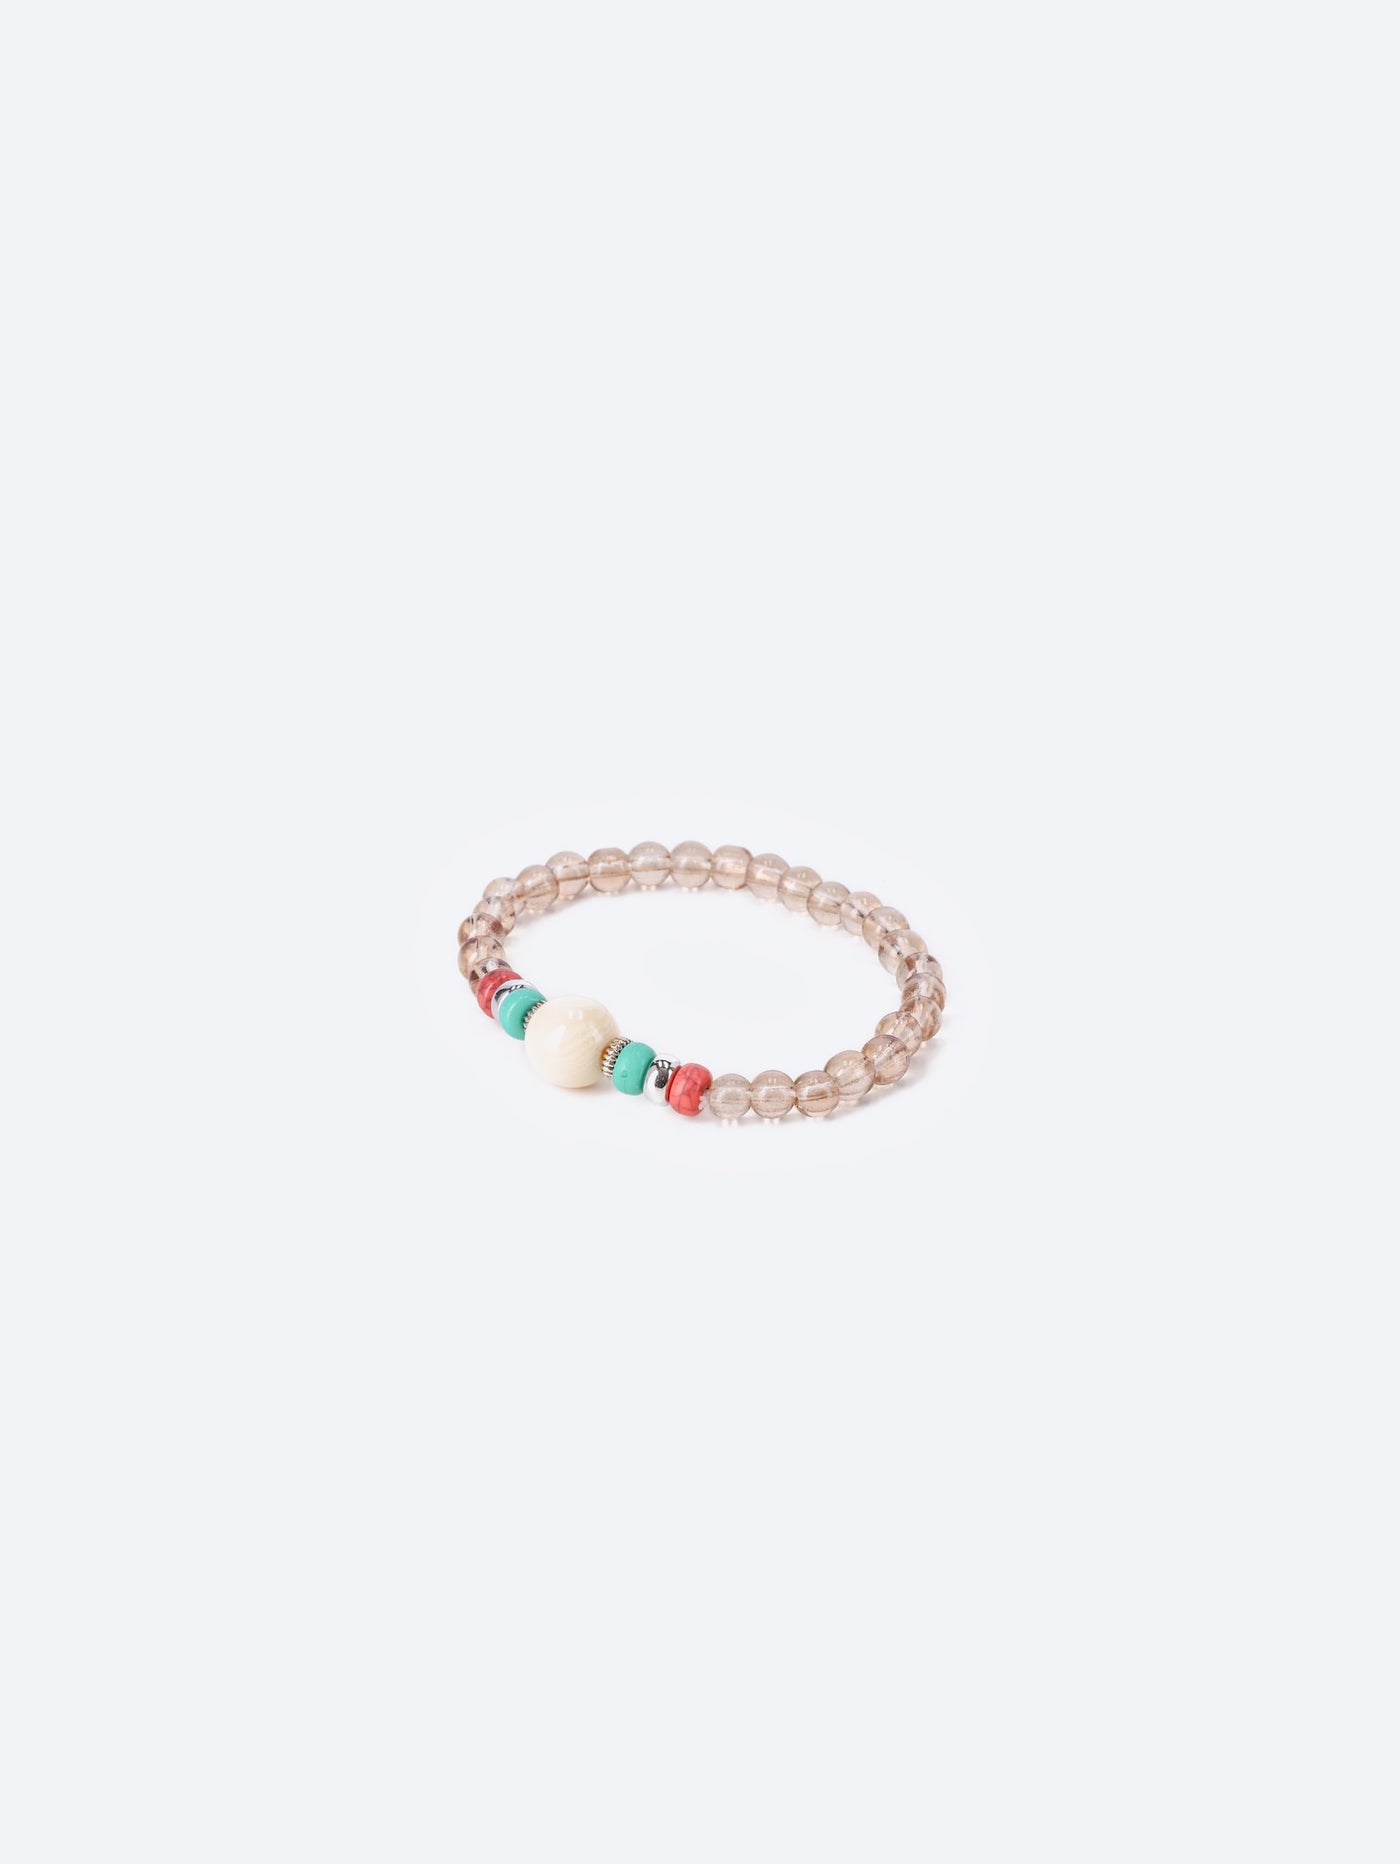 Bracelet Set - Beads & Pearls - 4 Pieces